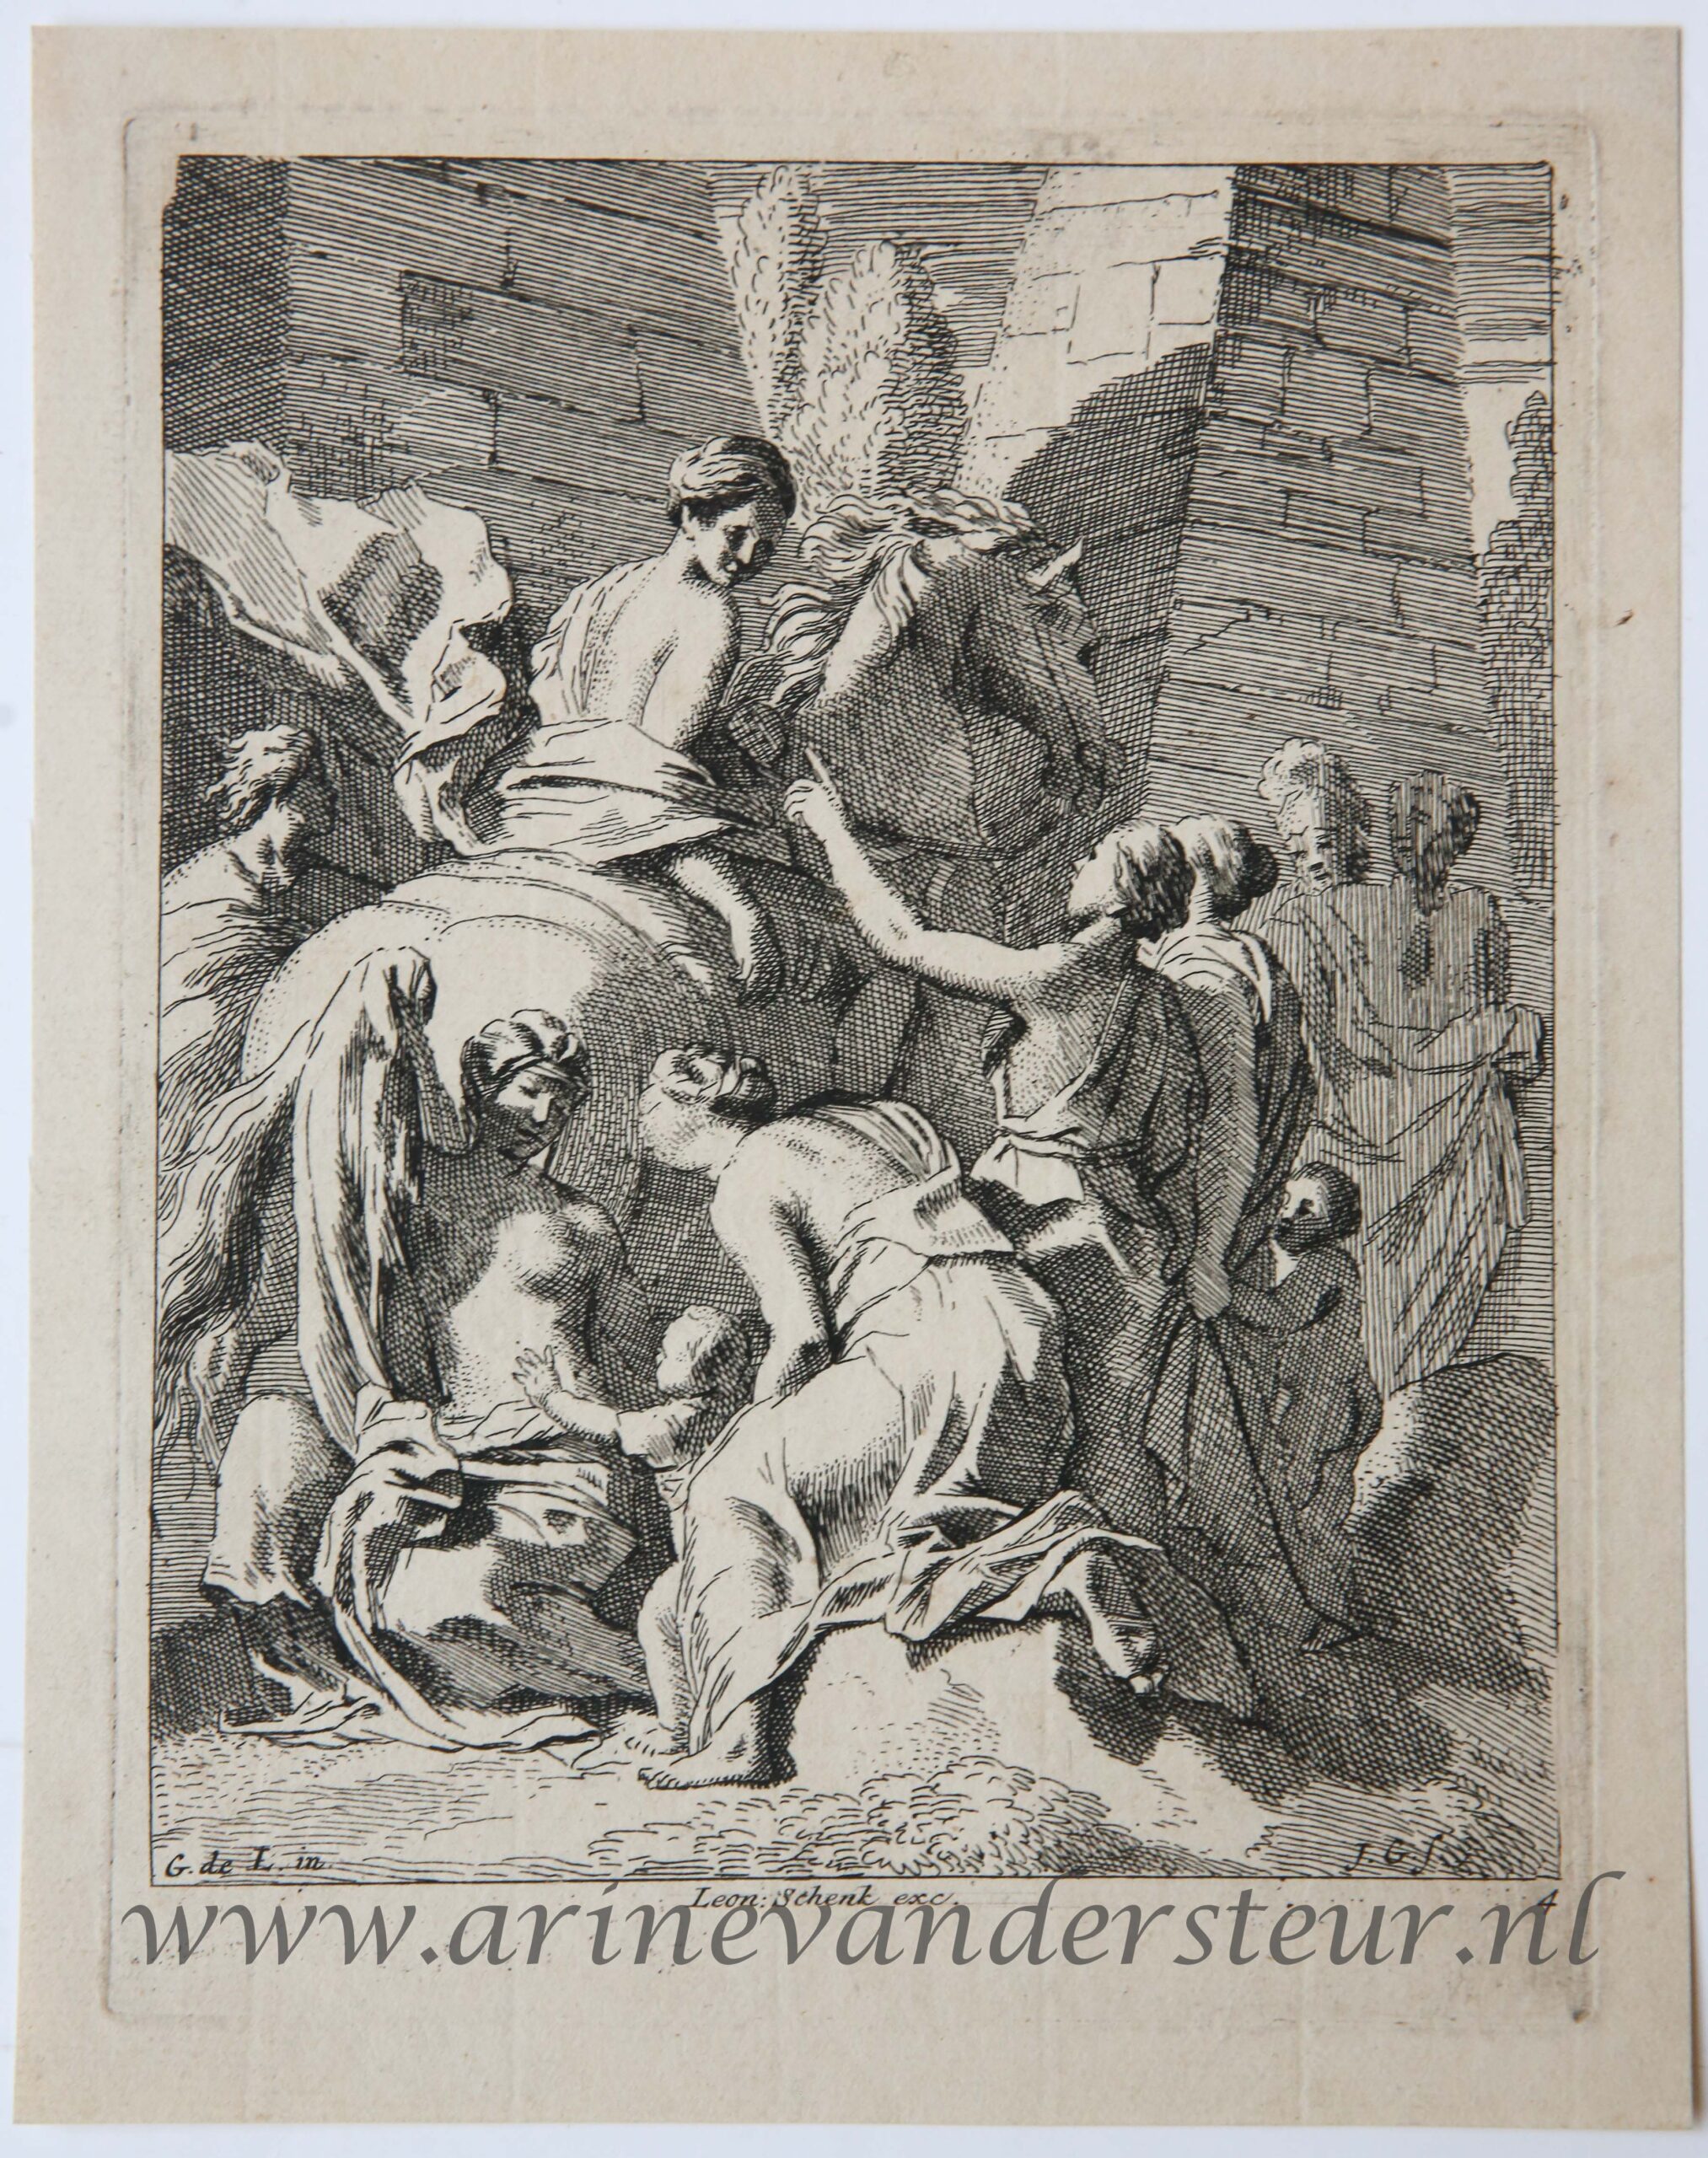 [Antique print, etching/ets] Cloelia escapes on the back of a stolen horse, published 1650-1750.